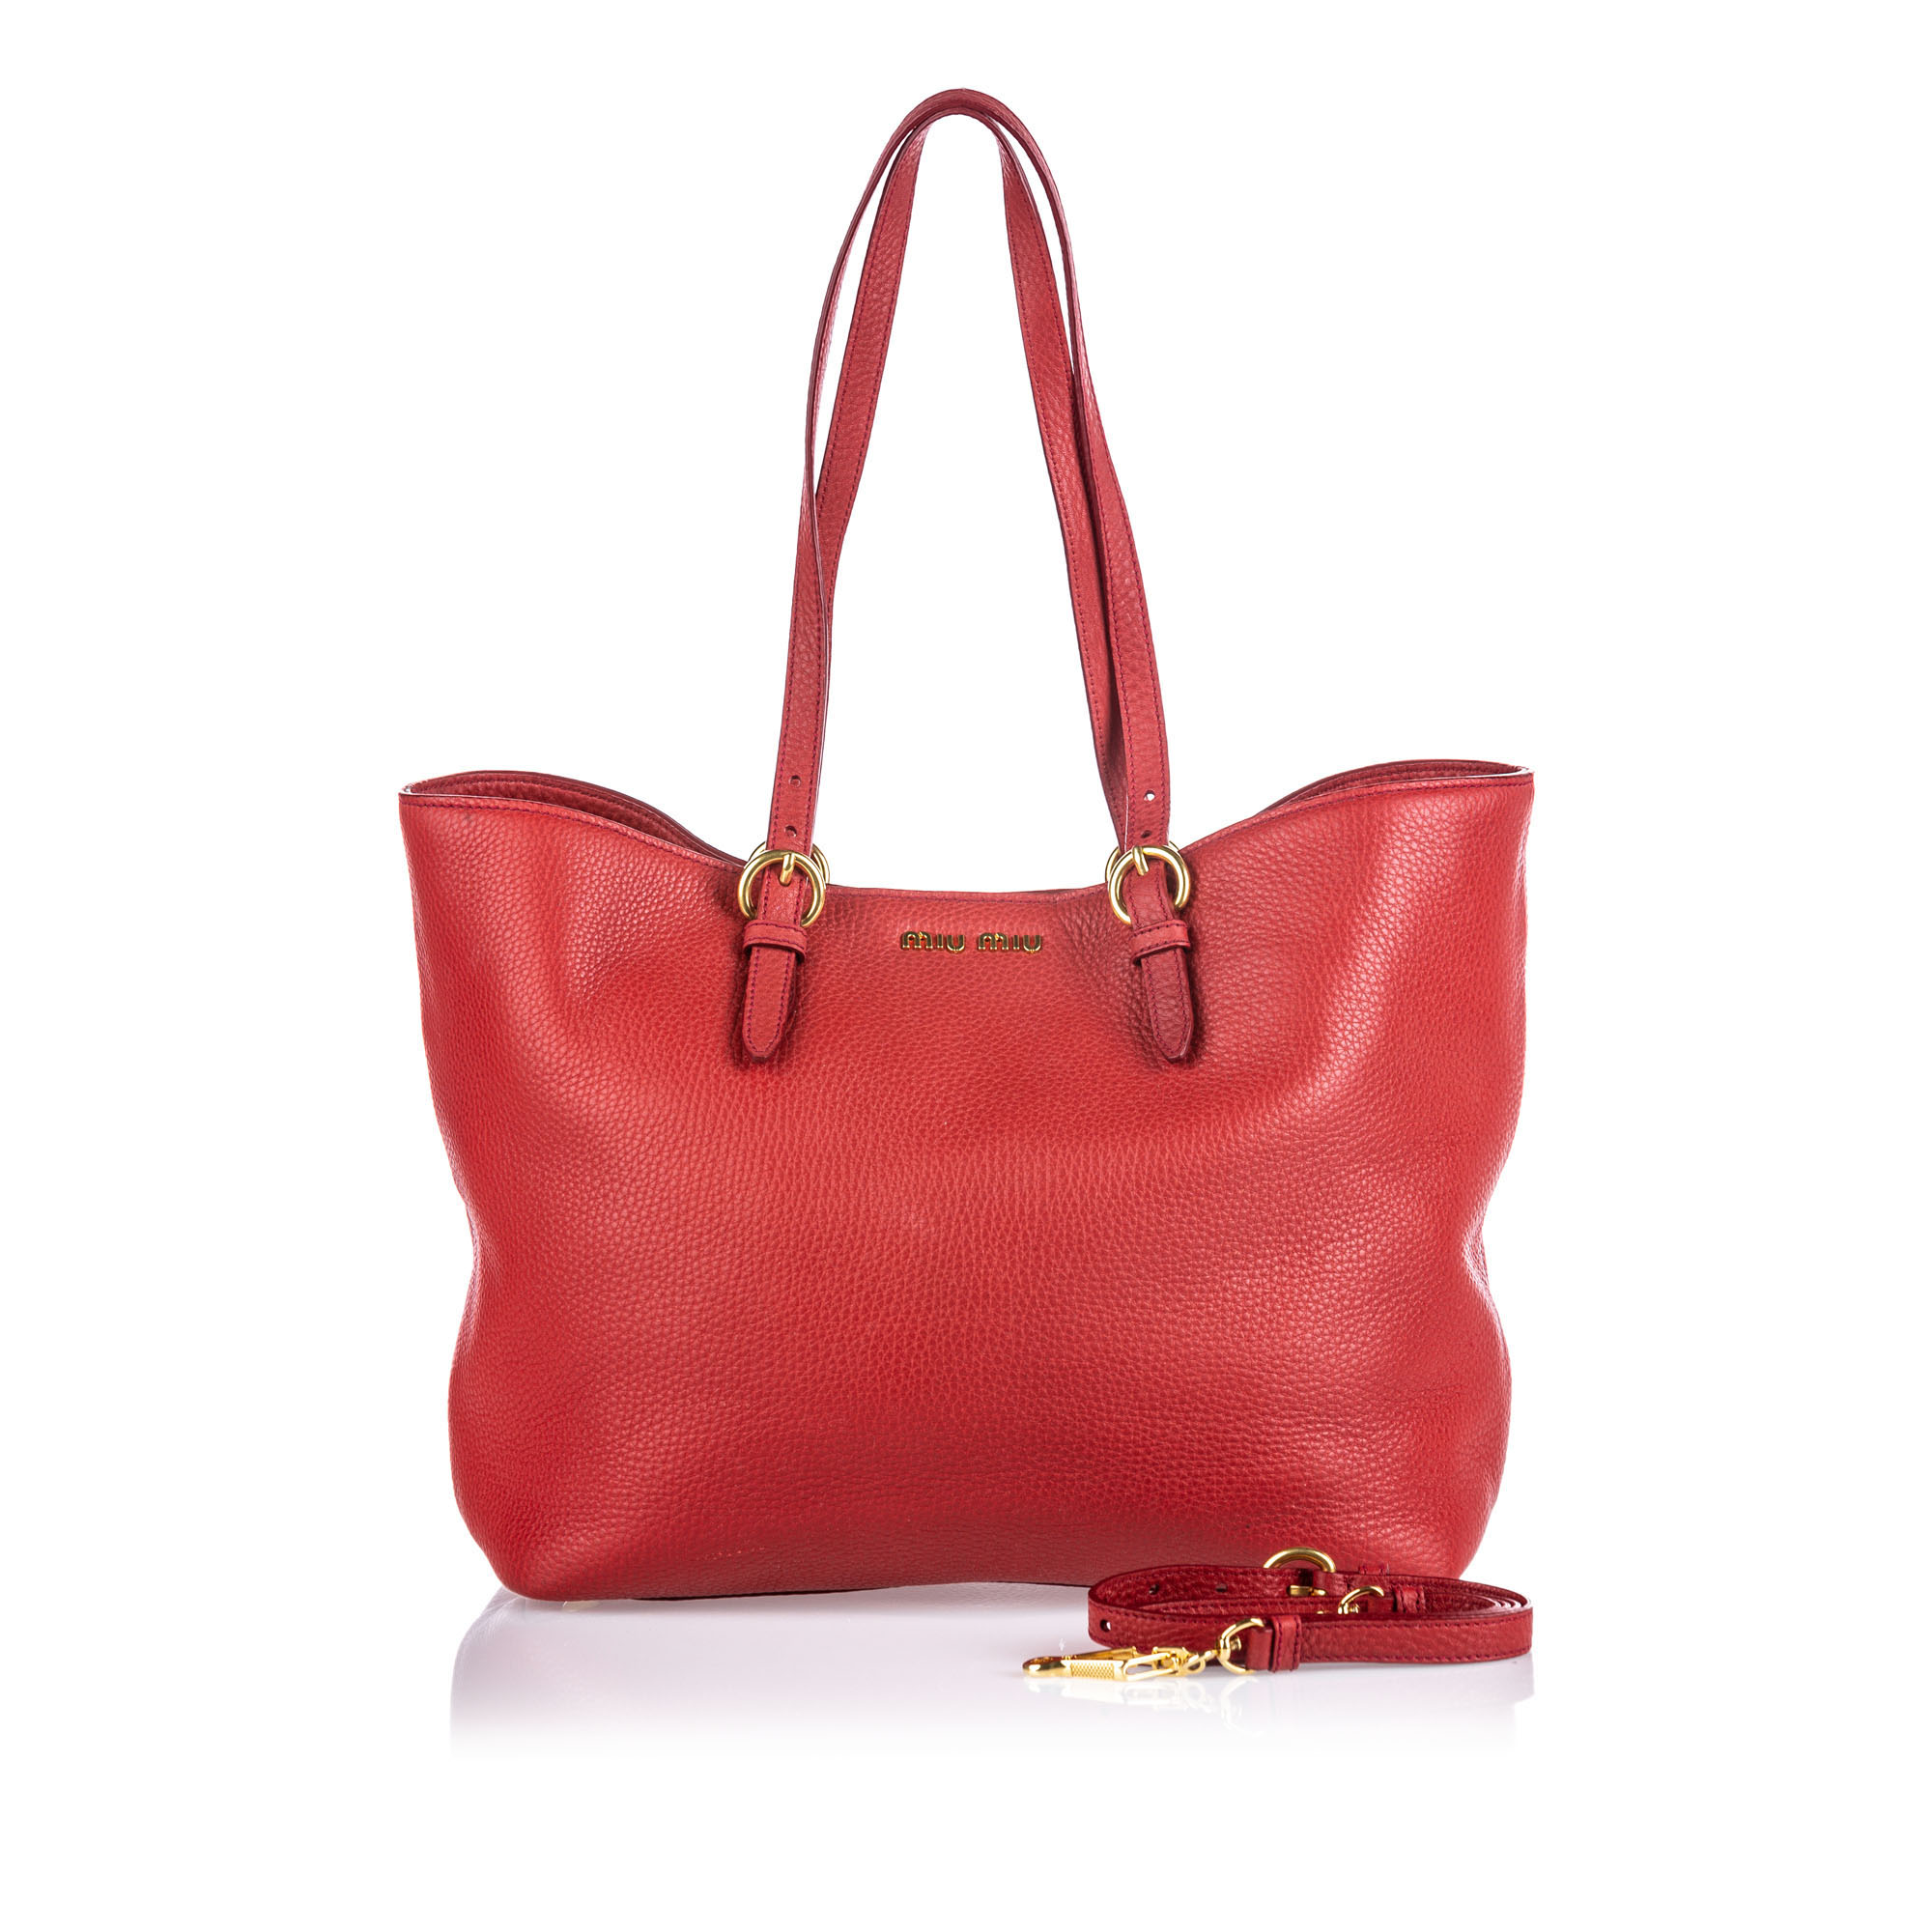 Miu Miu Vitello Daino Shopping Bag, this tote bag features a calf leather body, flat leather straps,